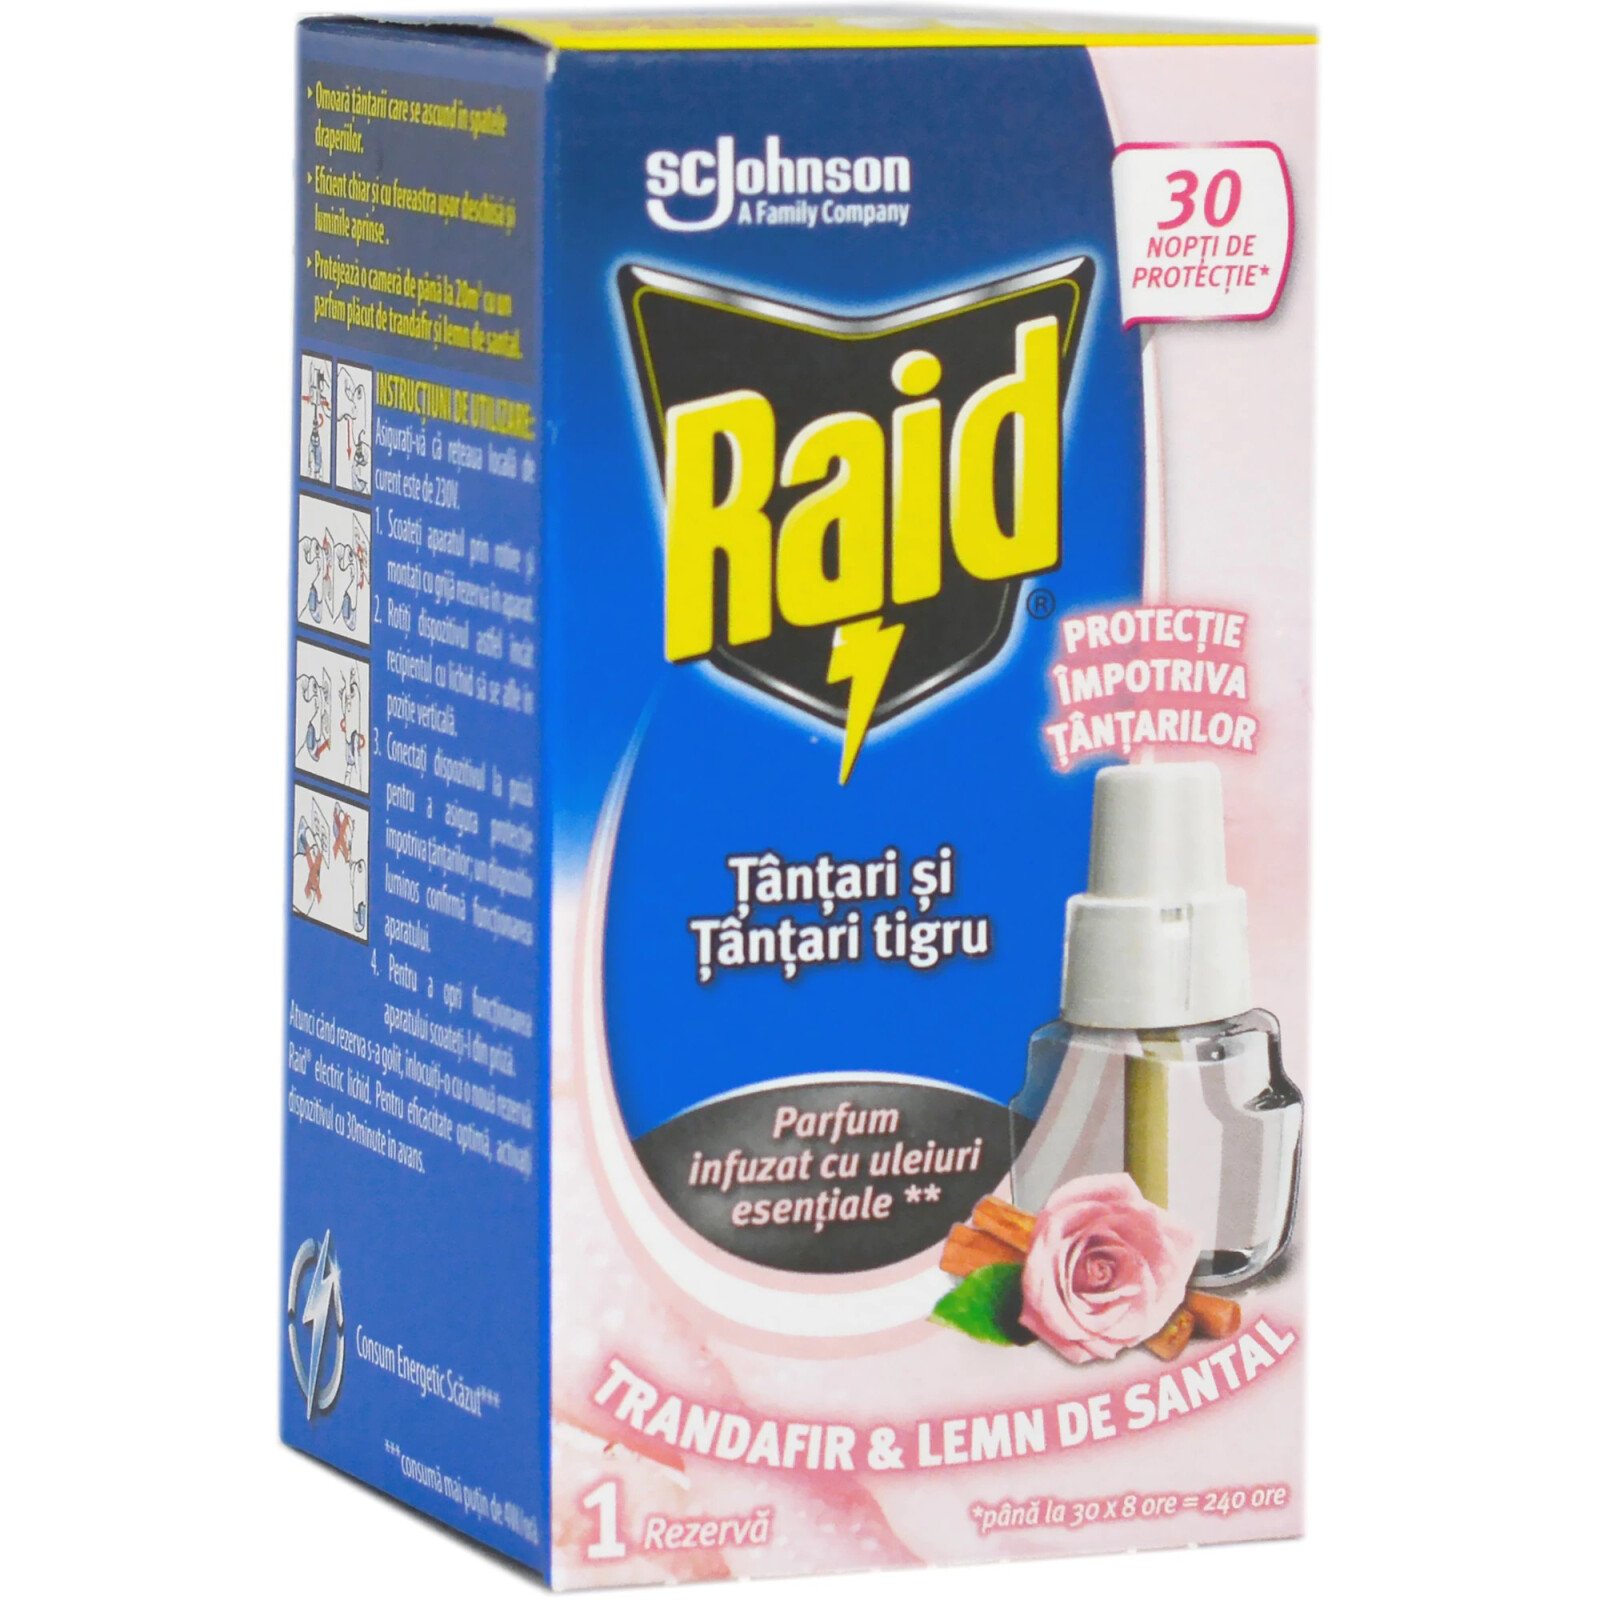 Raid mosquito repellent liquid spare bottle, Rose and Sandalwood, 30 nights, 21ml thumb